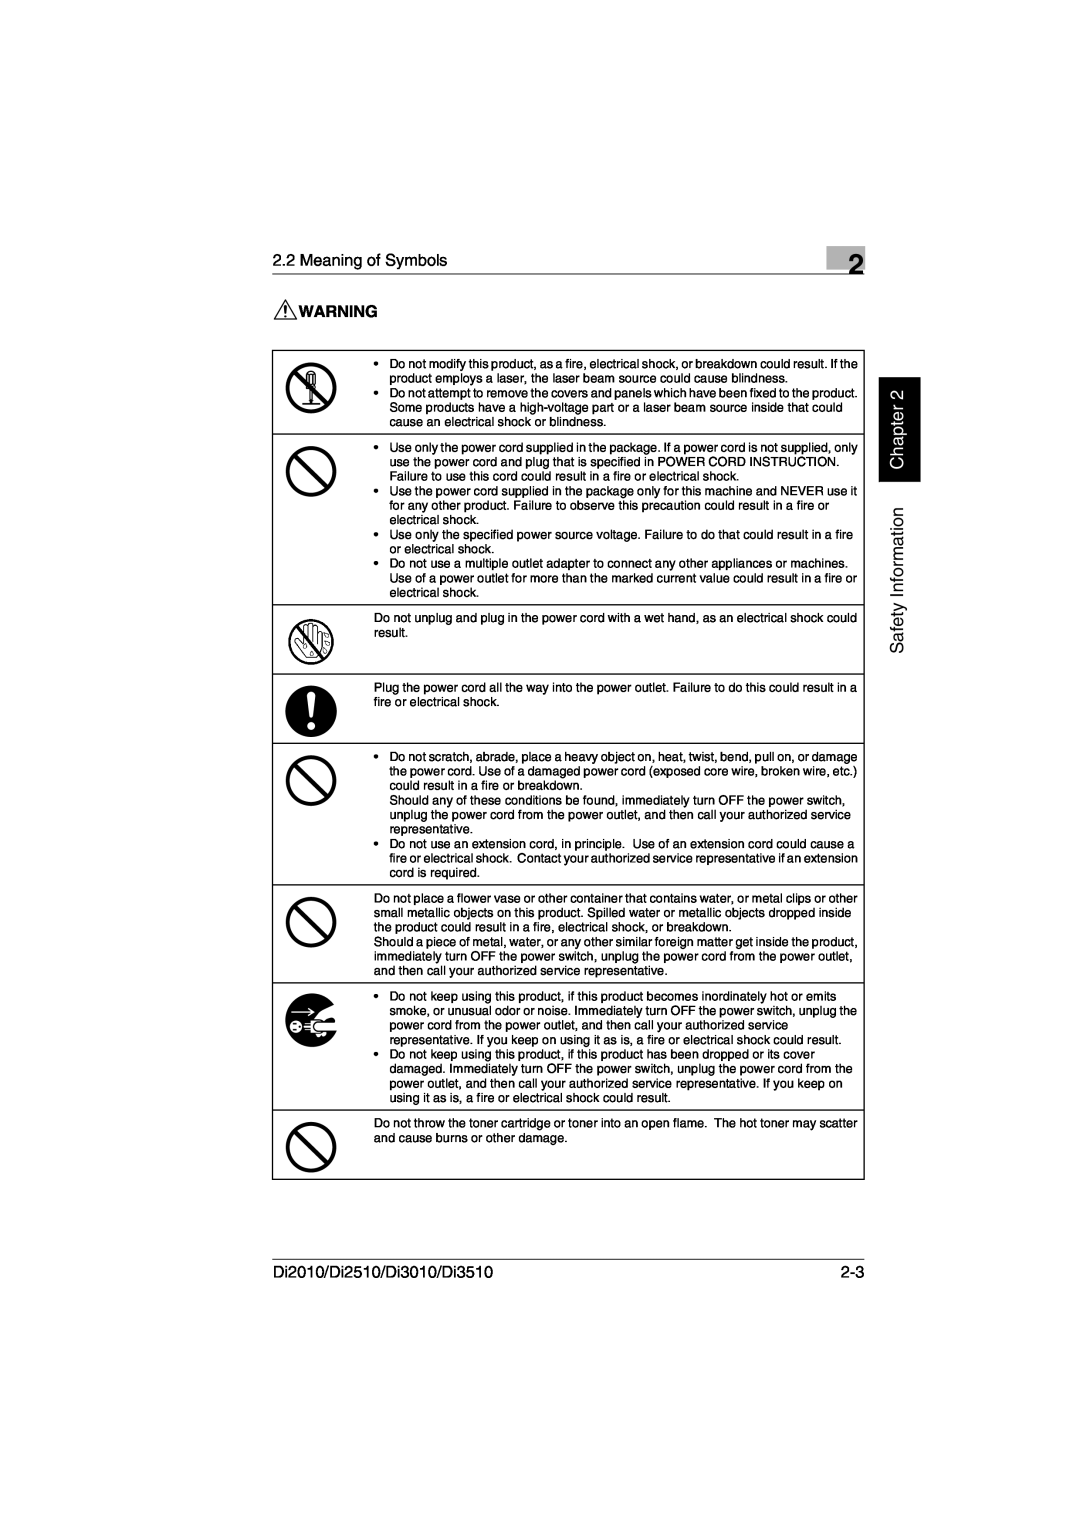 Minolta DI3010, DI2510, DI2010, Di3510 user manual Safety Information Chapter 